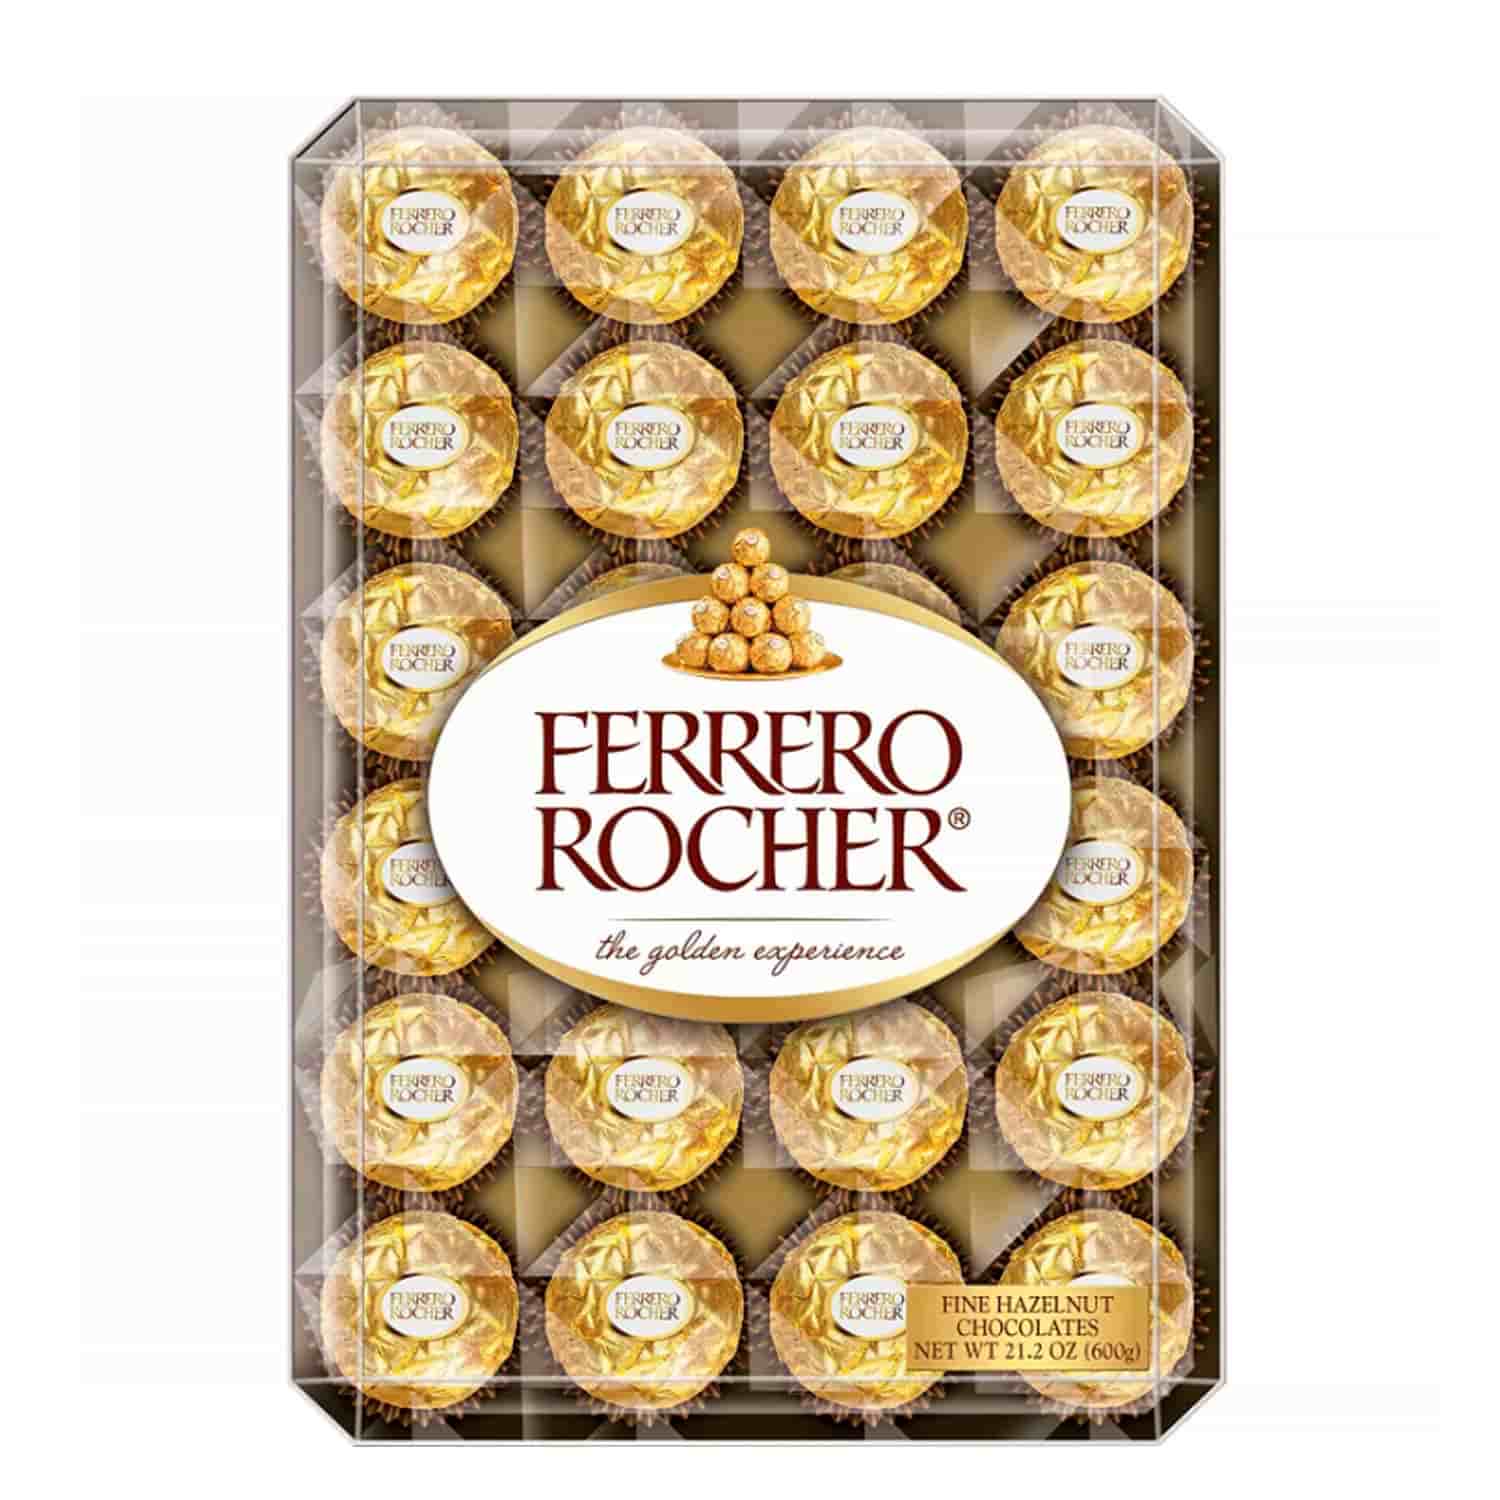 Ferrero Rocher, caja de 48 bombones